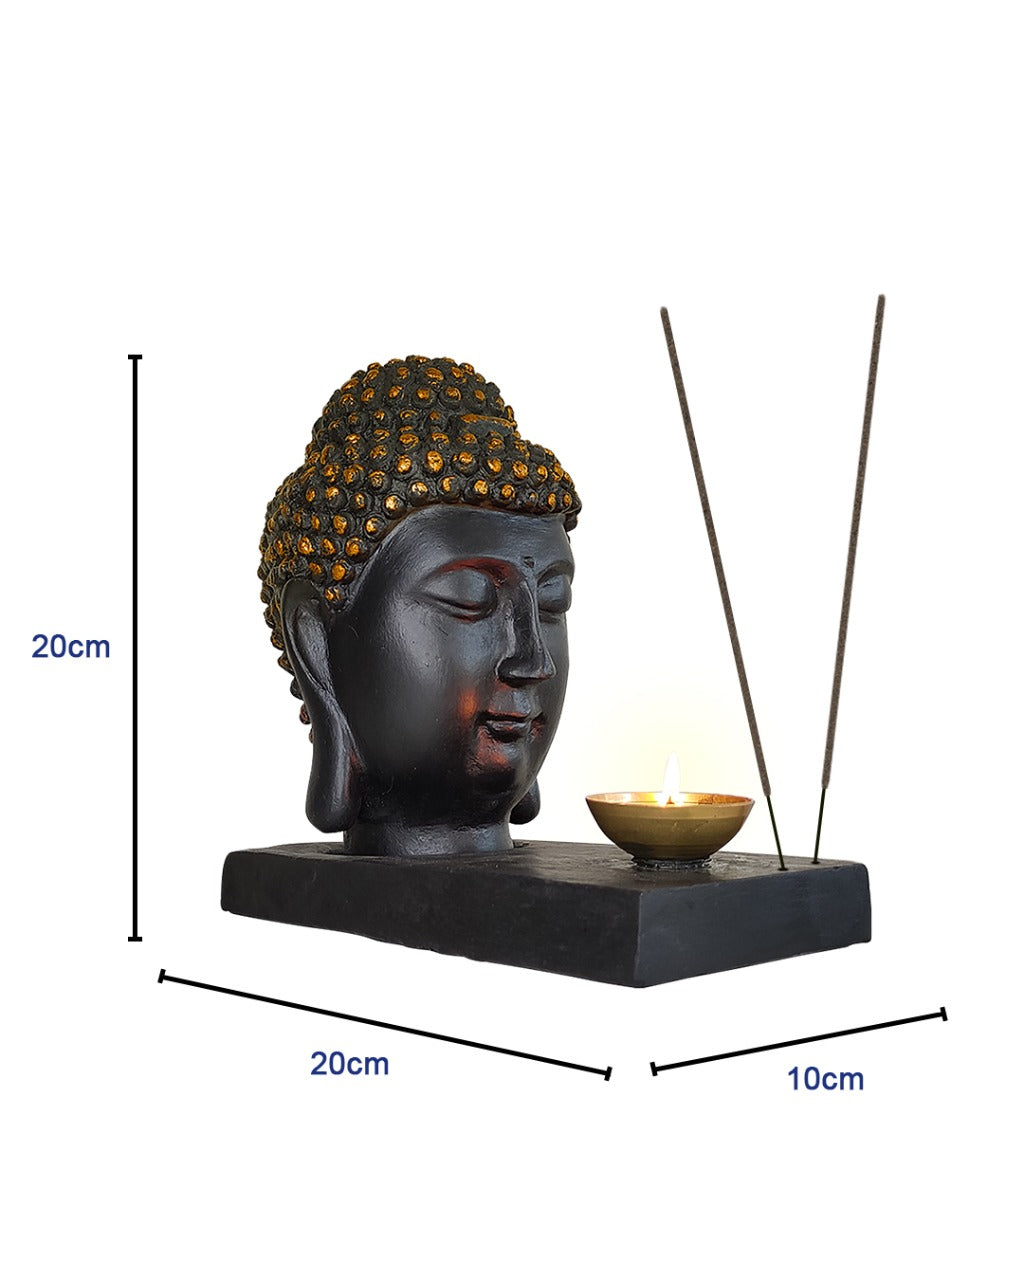 Buddha Tealight Candle Holder